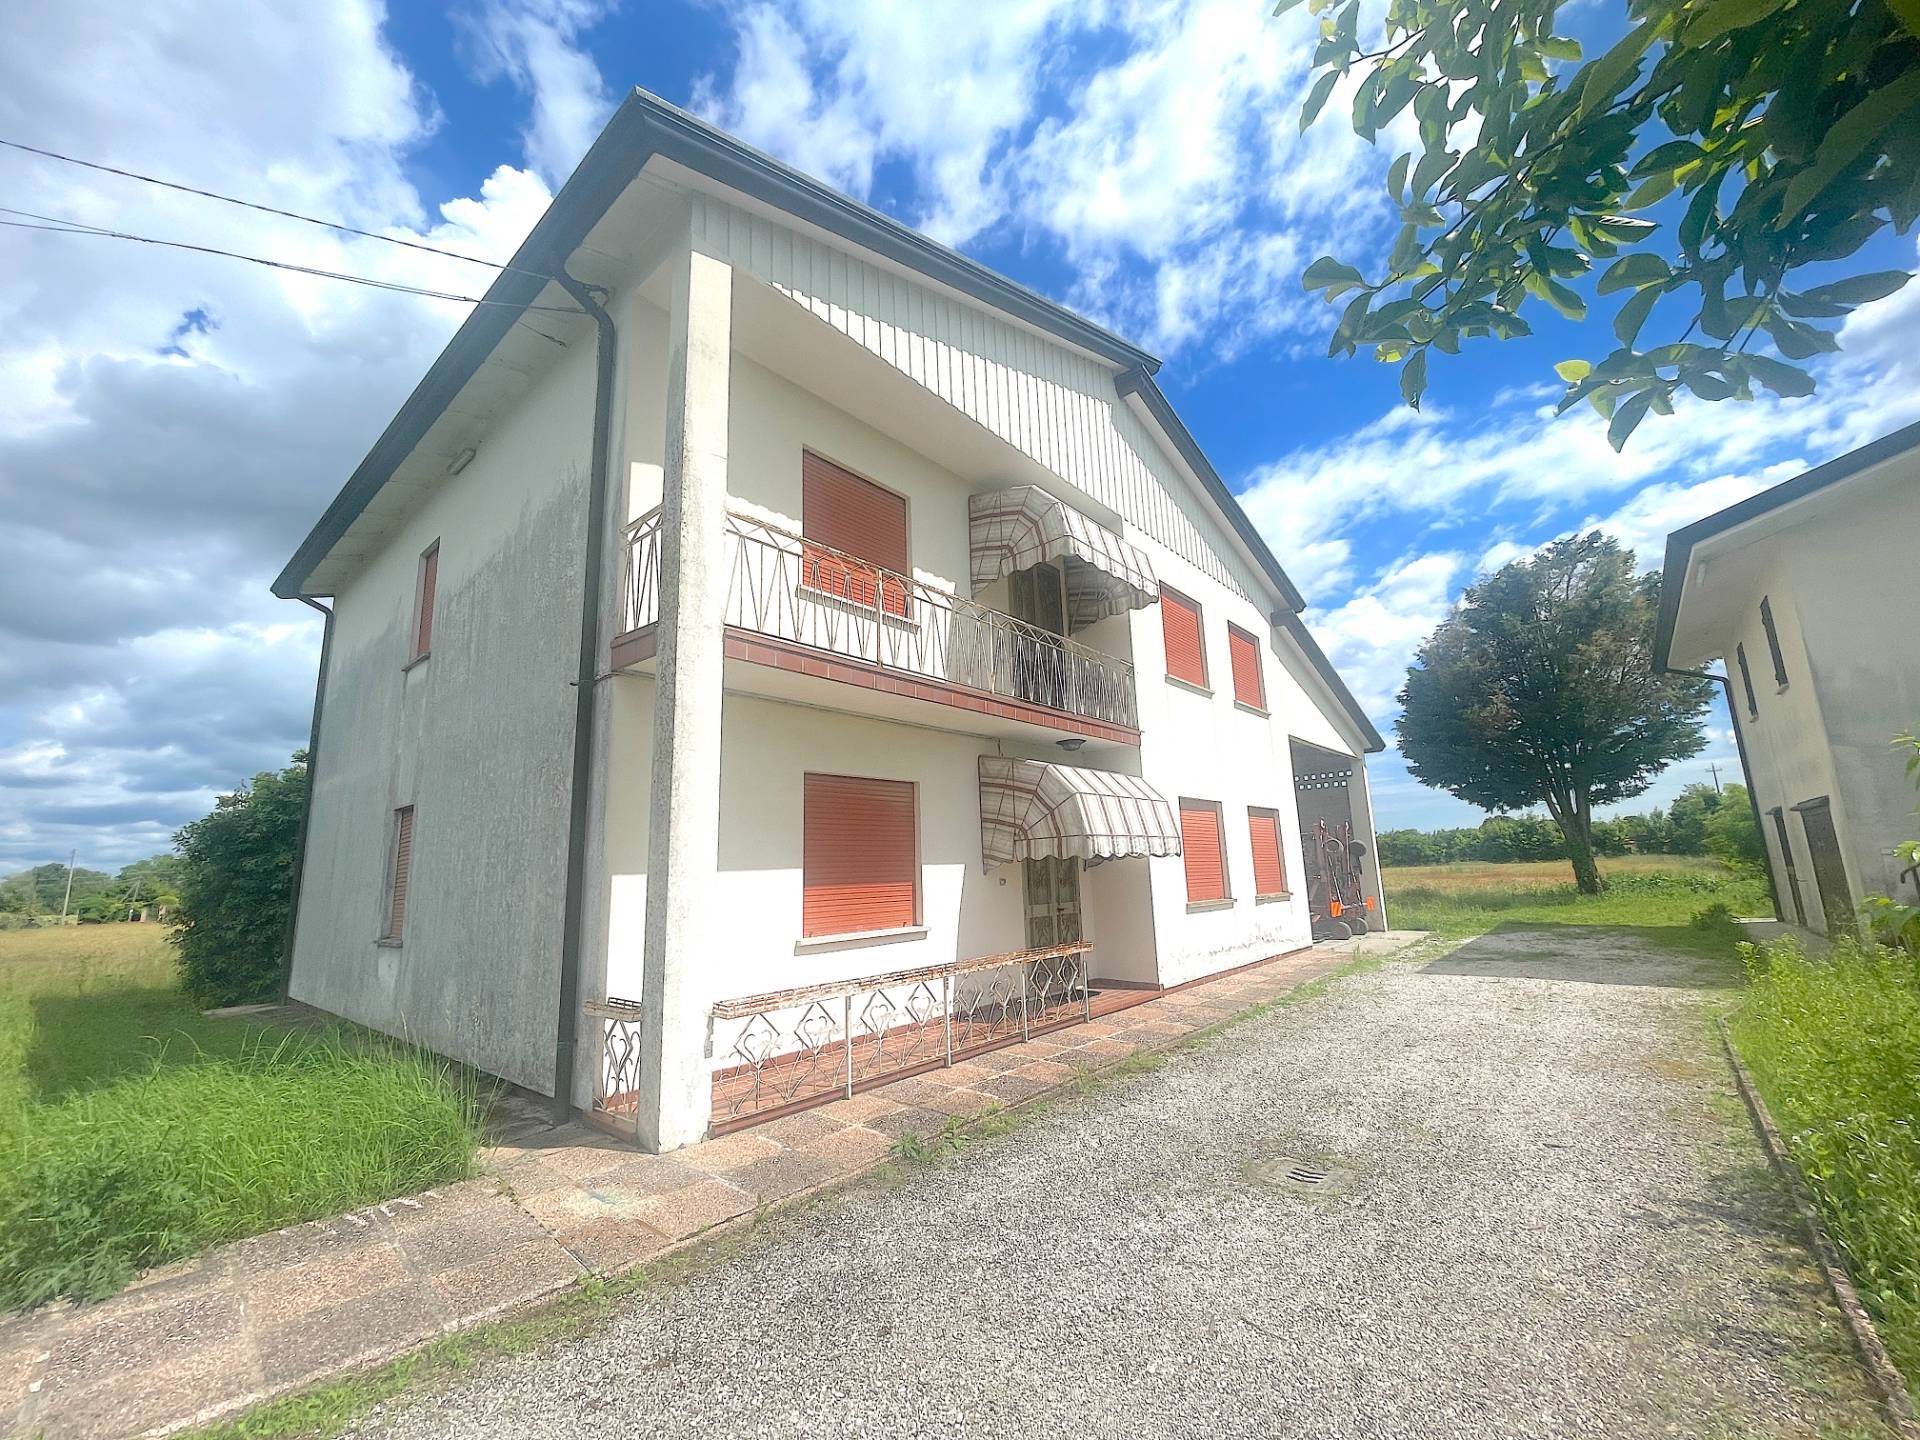 Villa in vendita Treviso